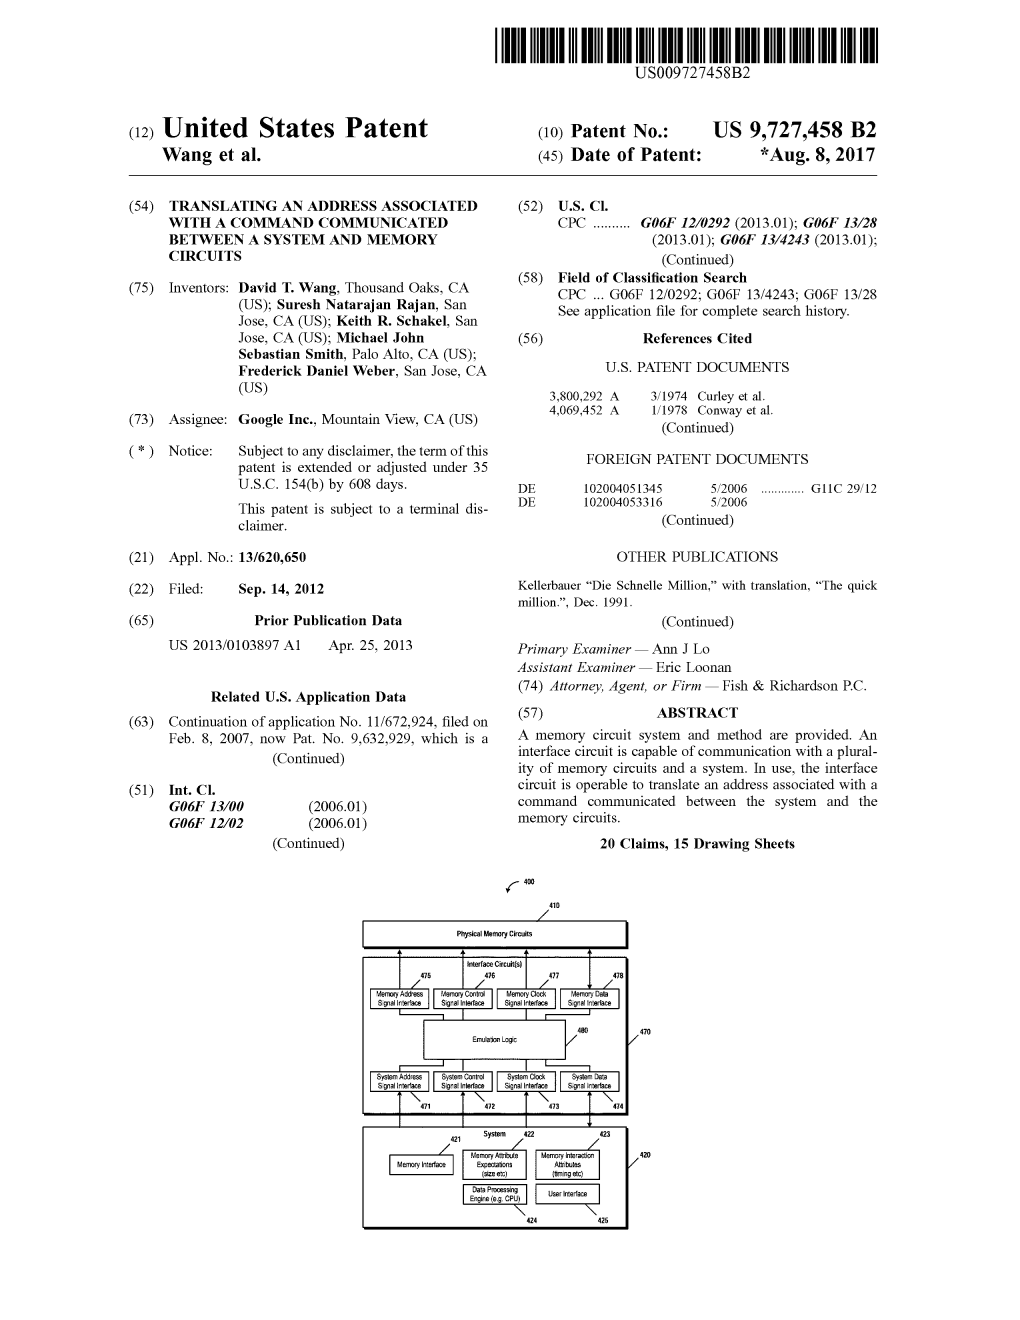 (12) United States Patent (10) Patent No.: US 9,727,458 B2 Wang Et Al